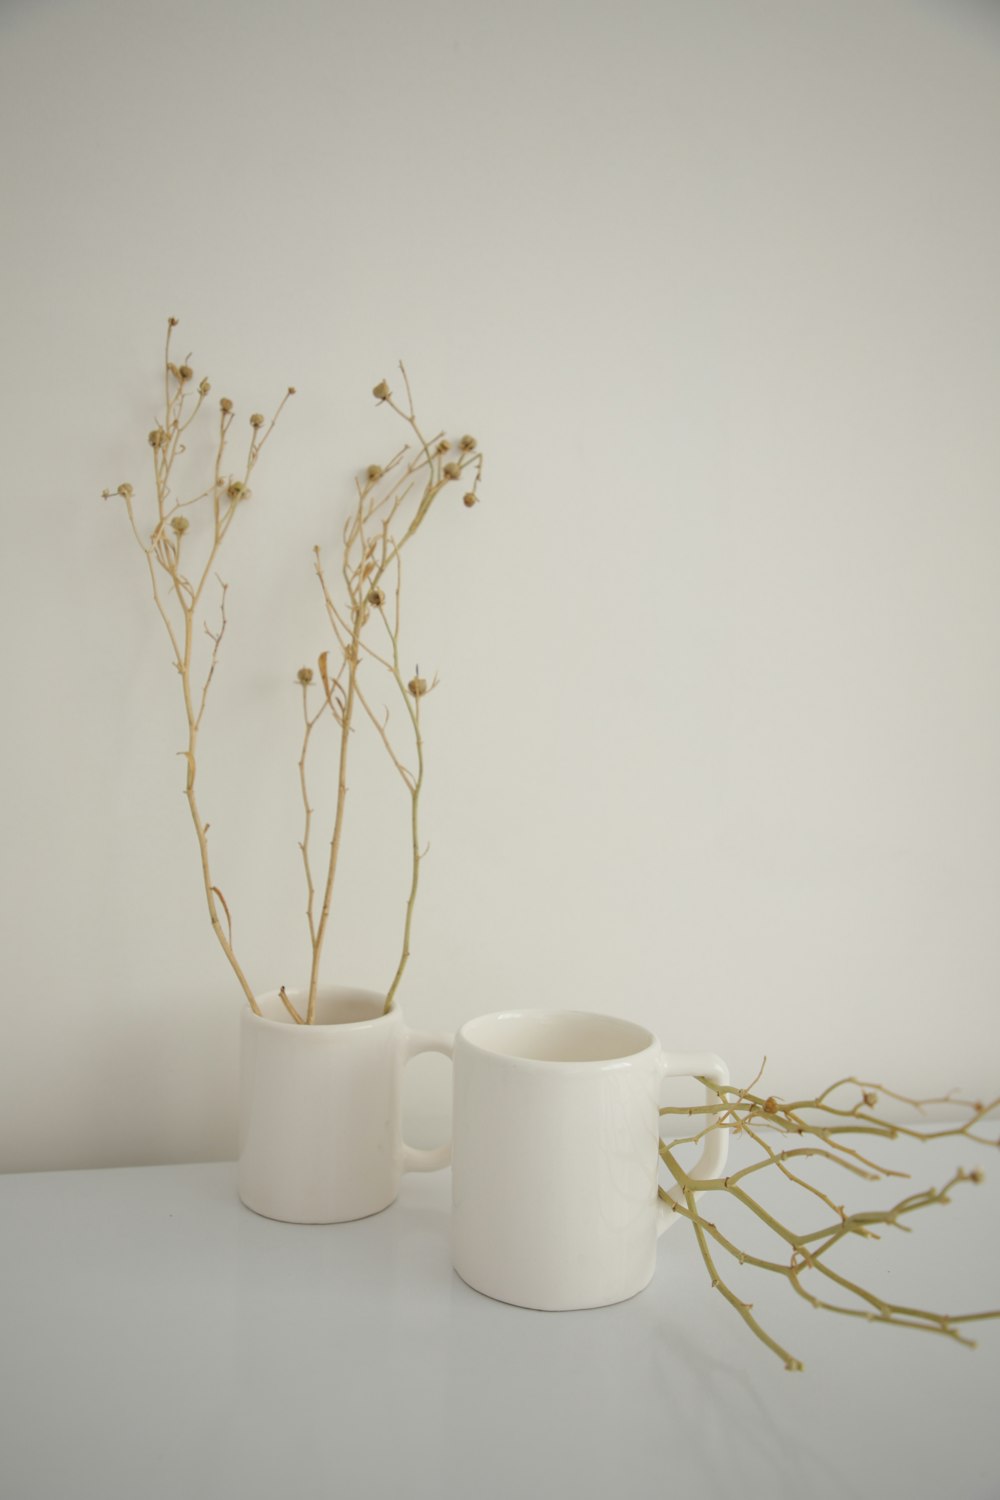 a plant in a white mug next to a white mug and a white mug